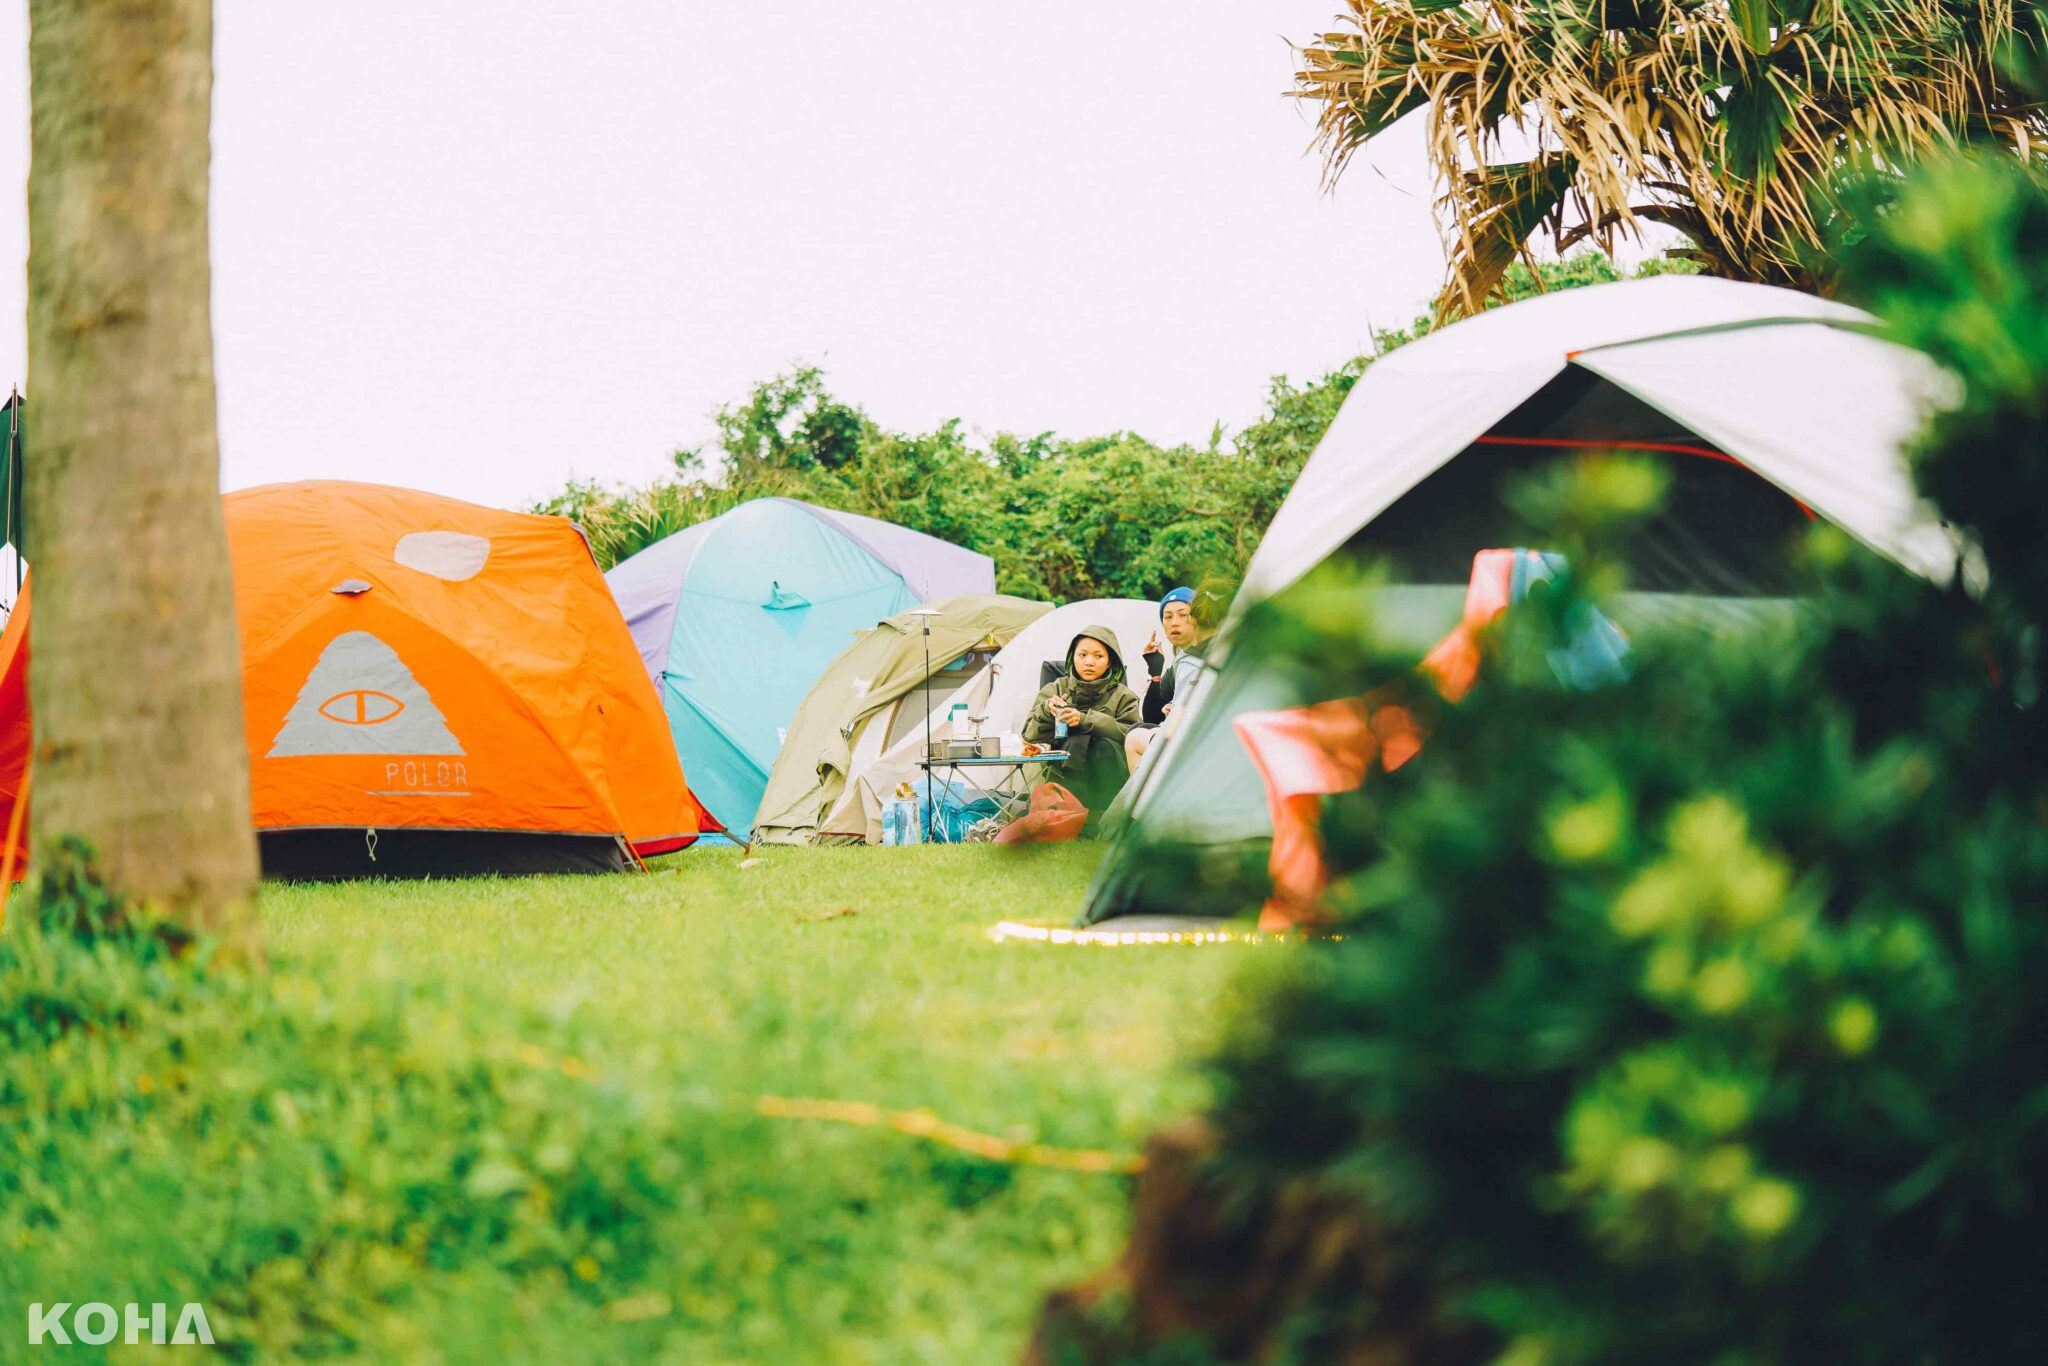 Organik Festival去年活動移師北海岸半島秘境，結合露營活動全心沈浸音樂與綠意 1